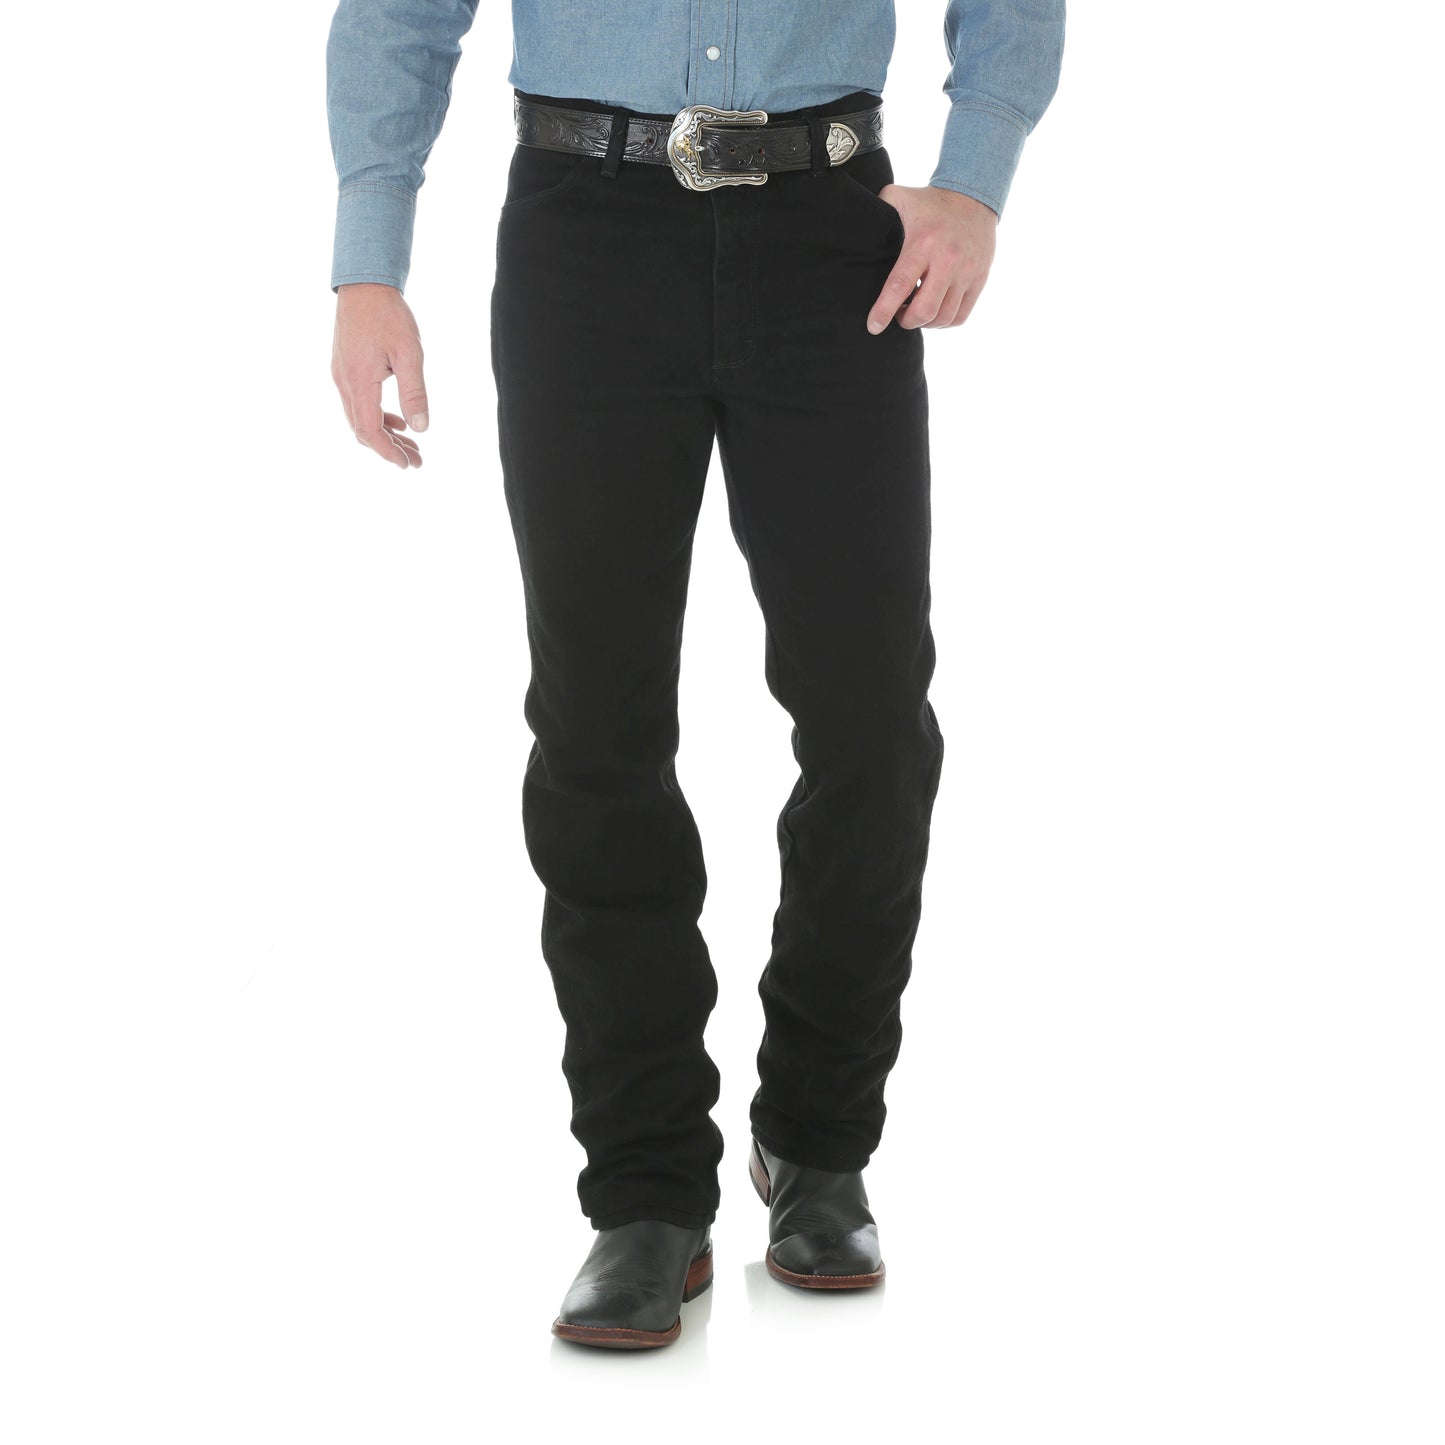 Wrangler Men's Black Cowboy Cut Slim Fit Jean